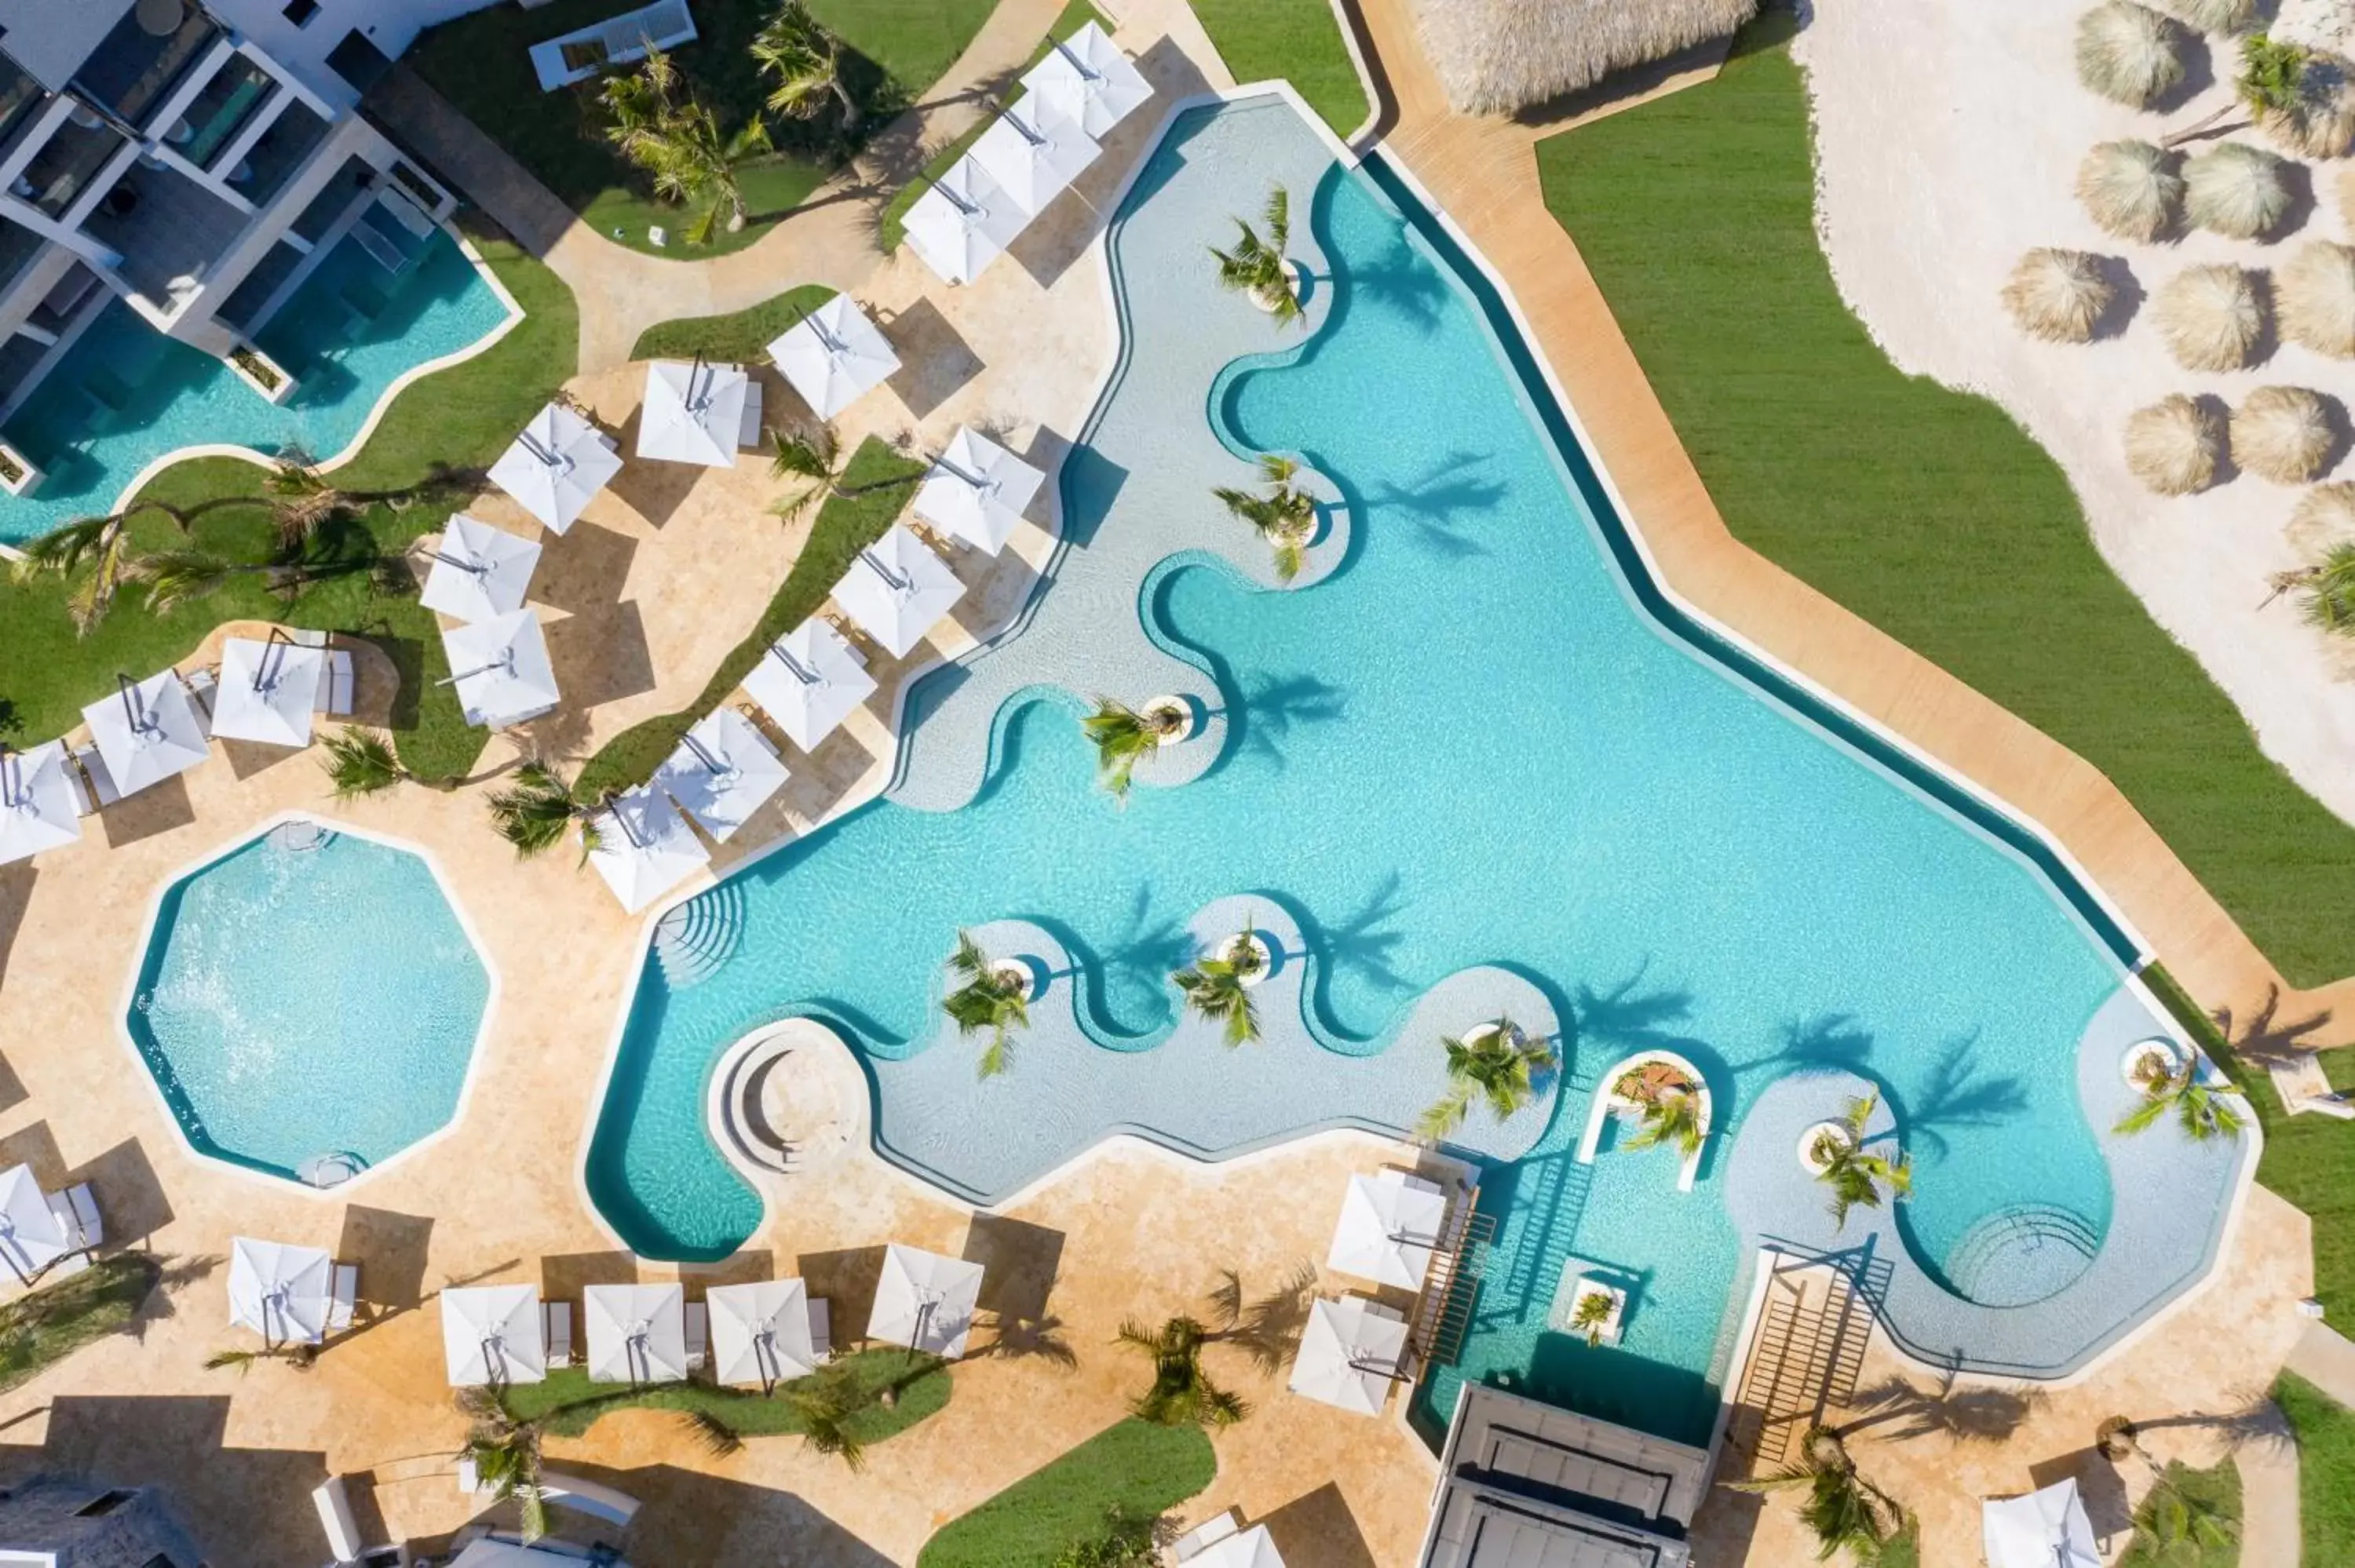 Swimming pool, Pool View in Dreams Macao Beach Punta Cana